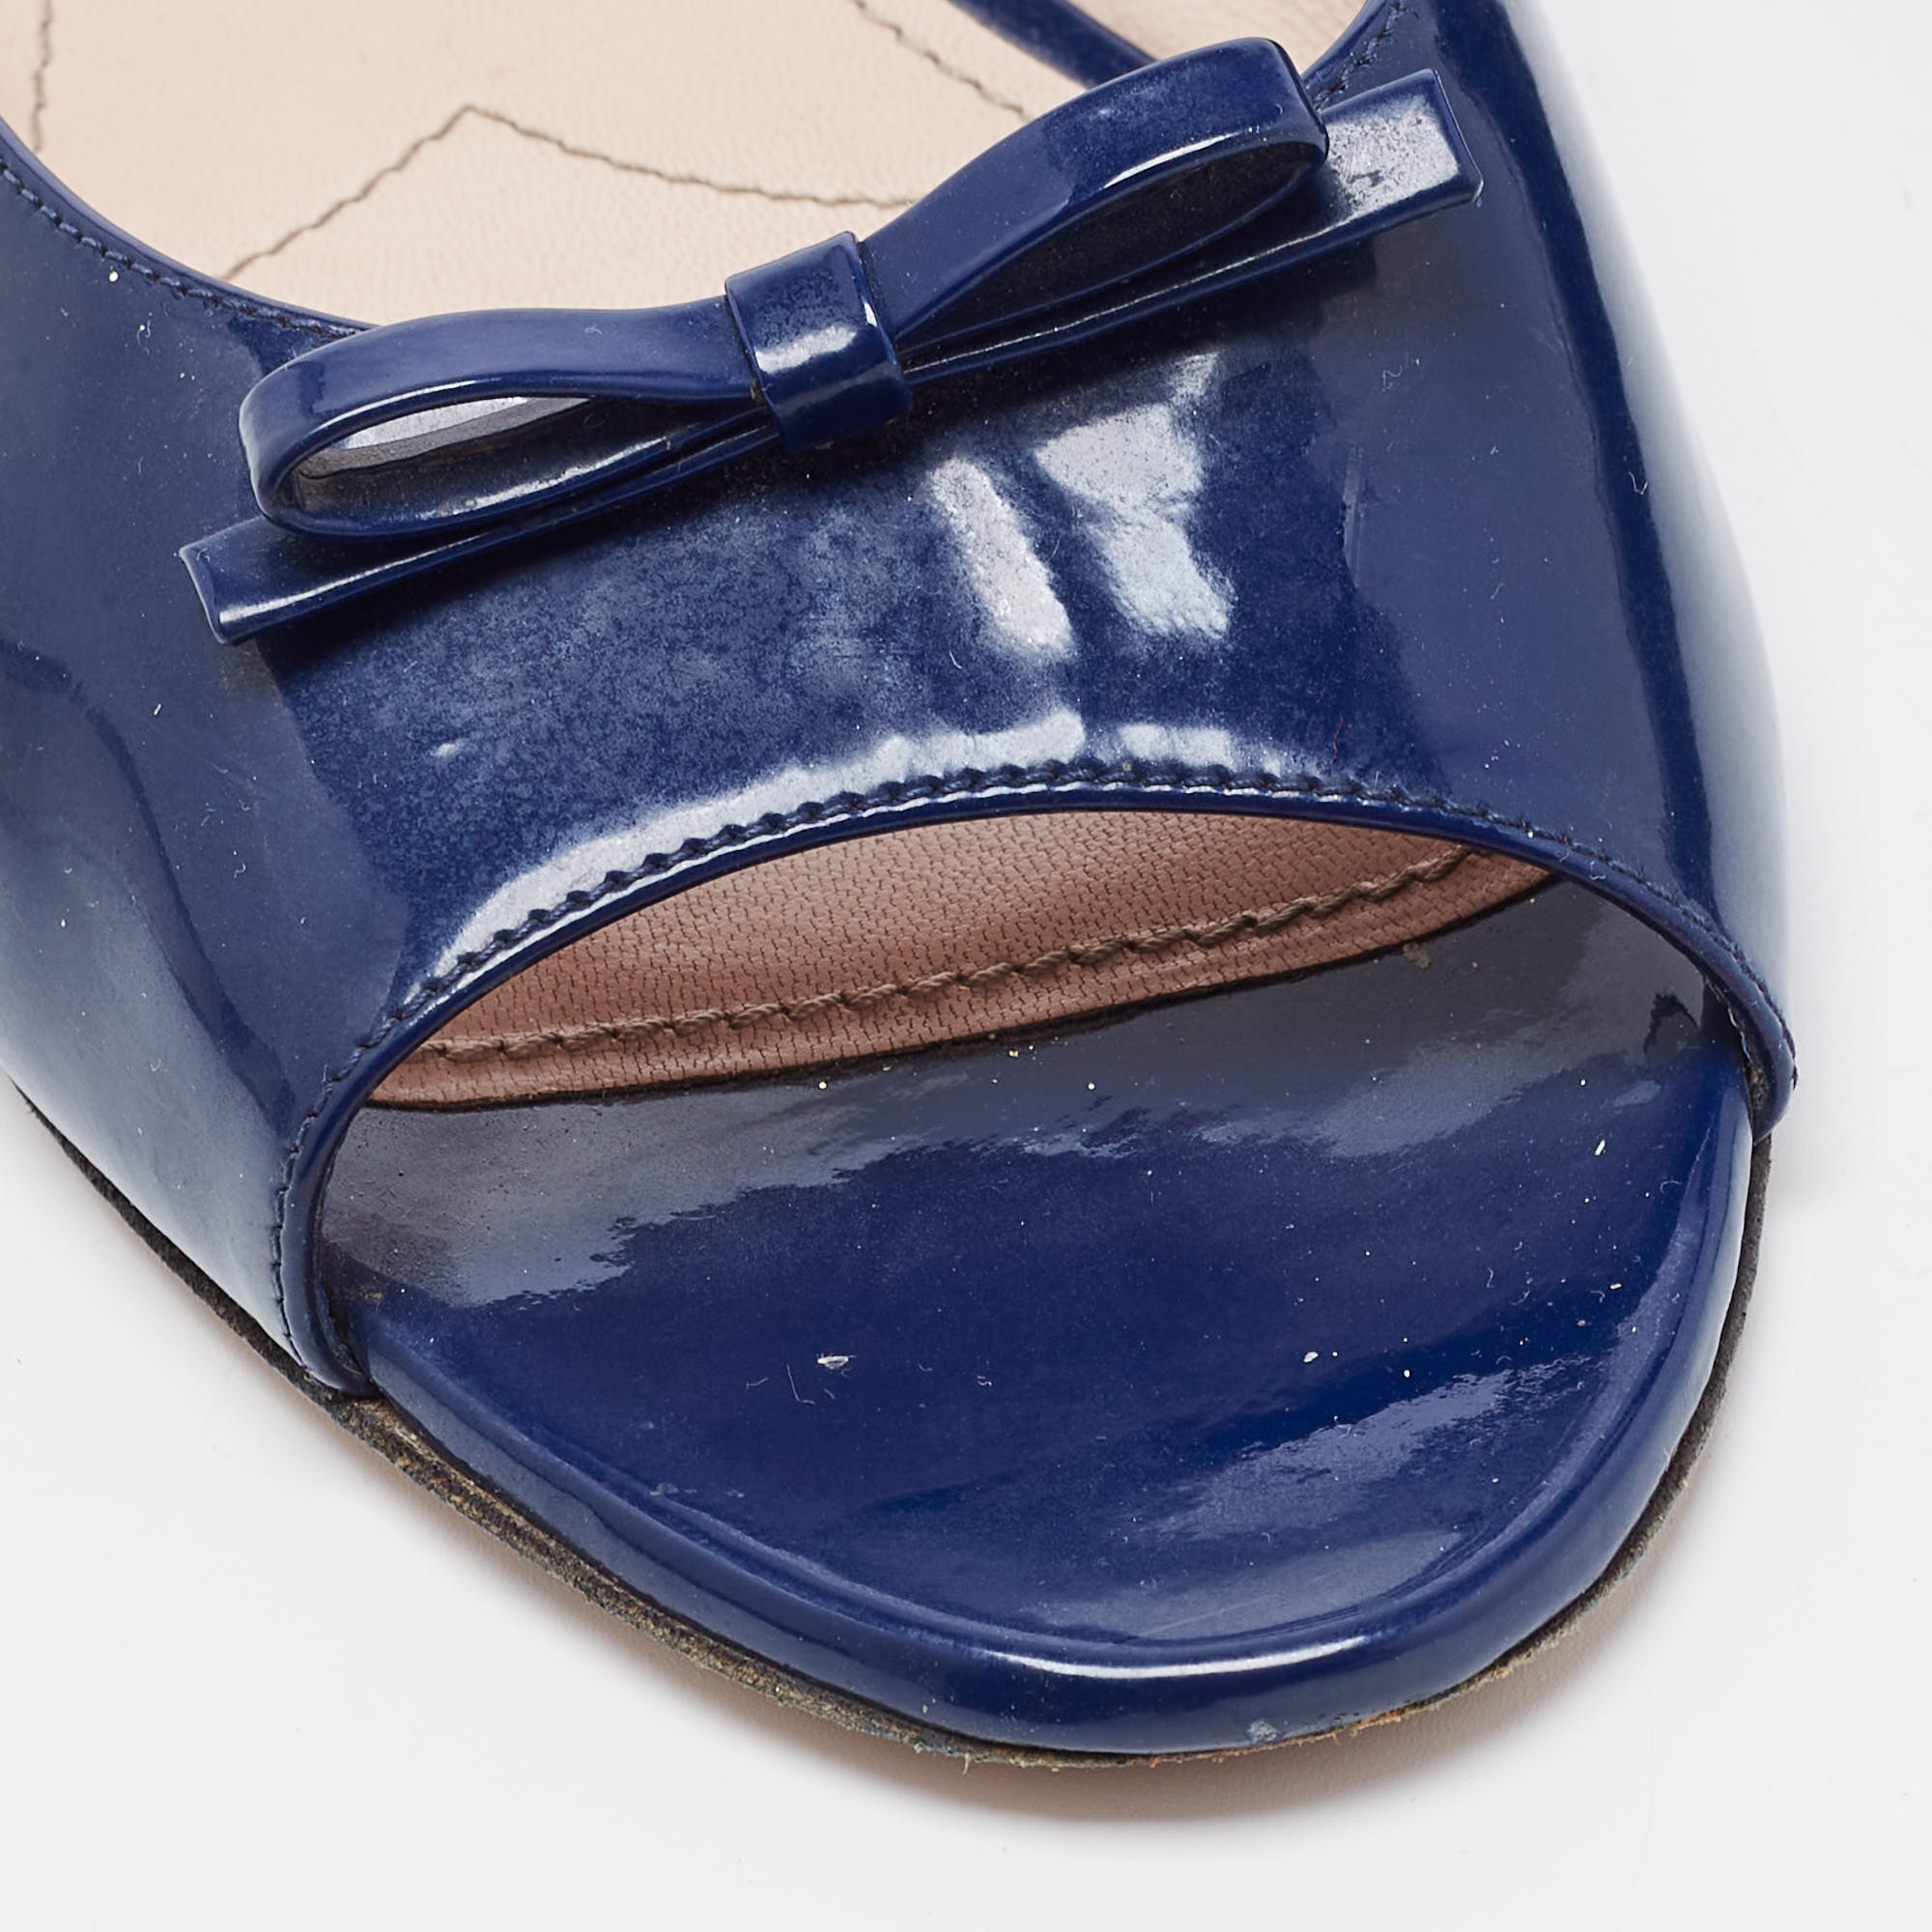 Miu Miu Navy Blue Patent Leather Bow Detail Jeweled Heel Flat Slides Size 39